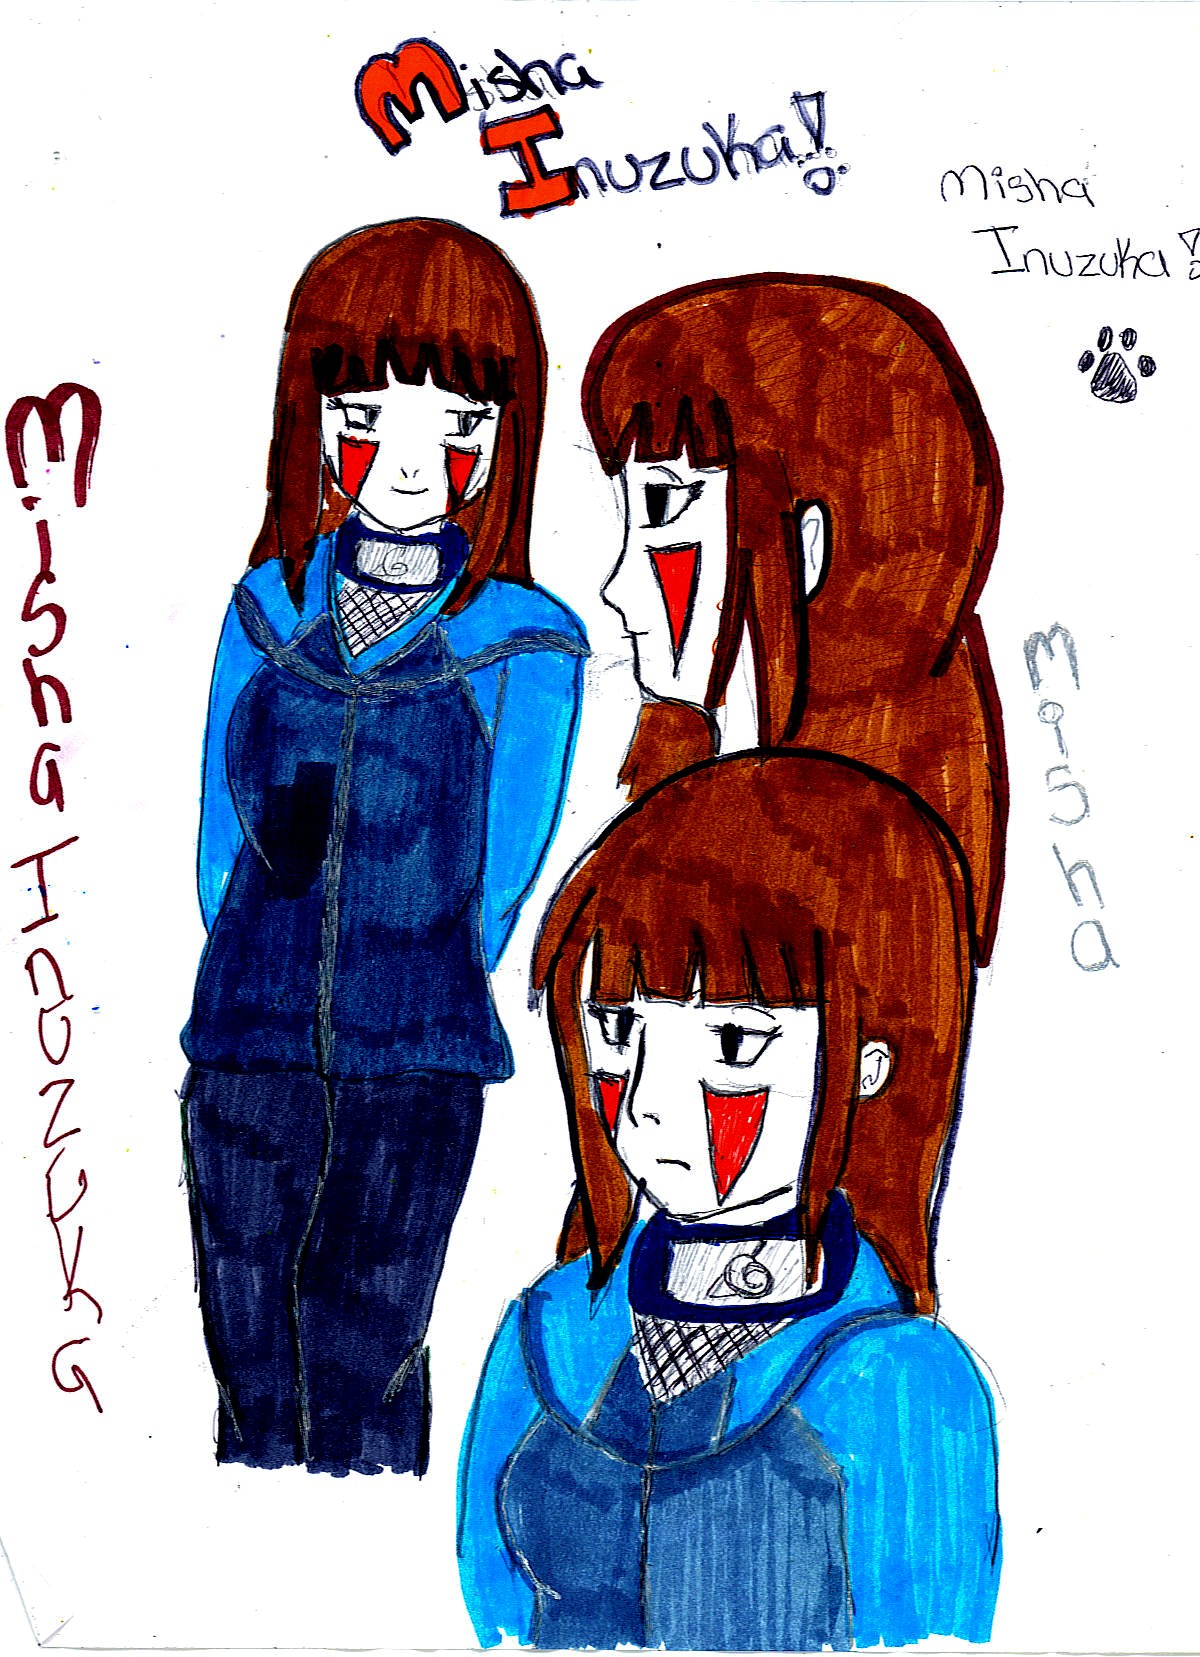 My Naruto Character, Misha by sasukeisemo2006 - Fanart Central